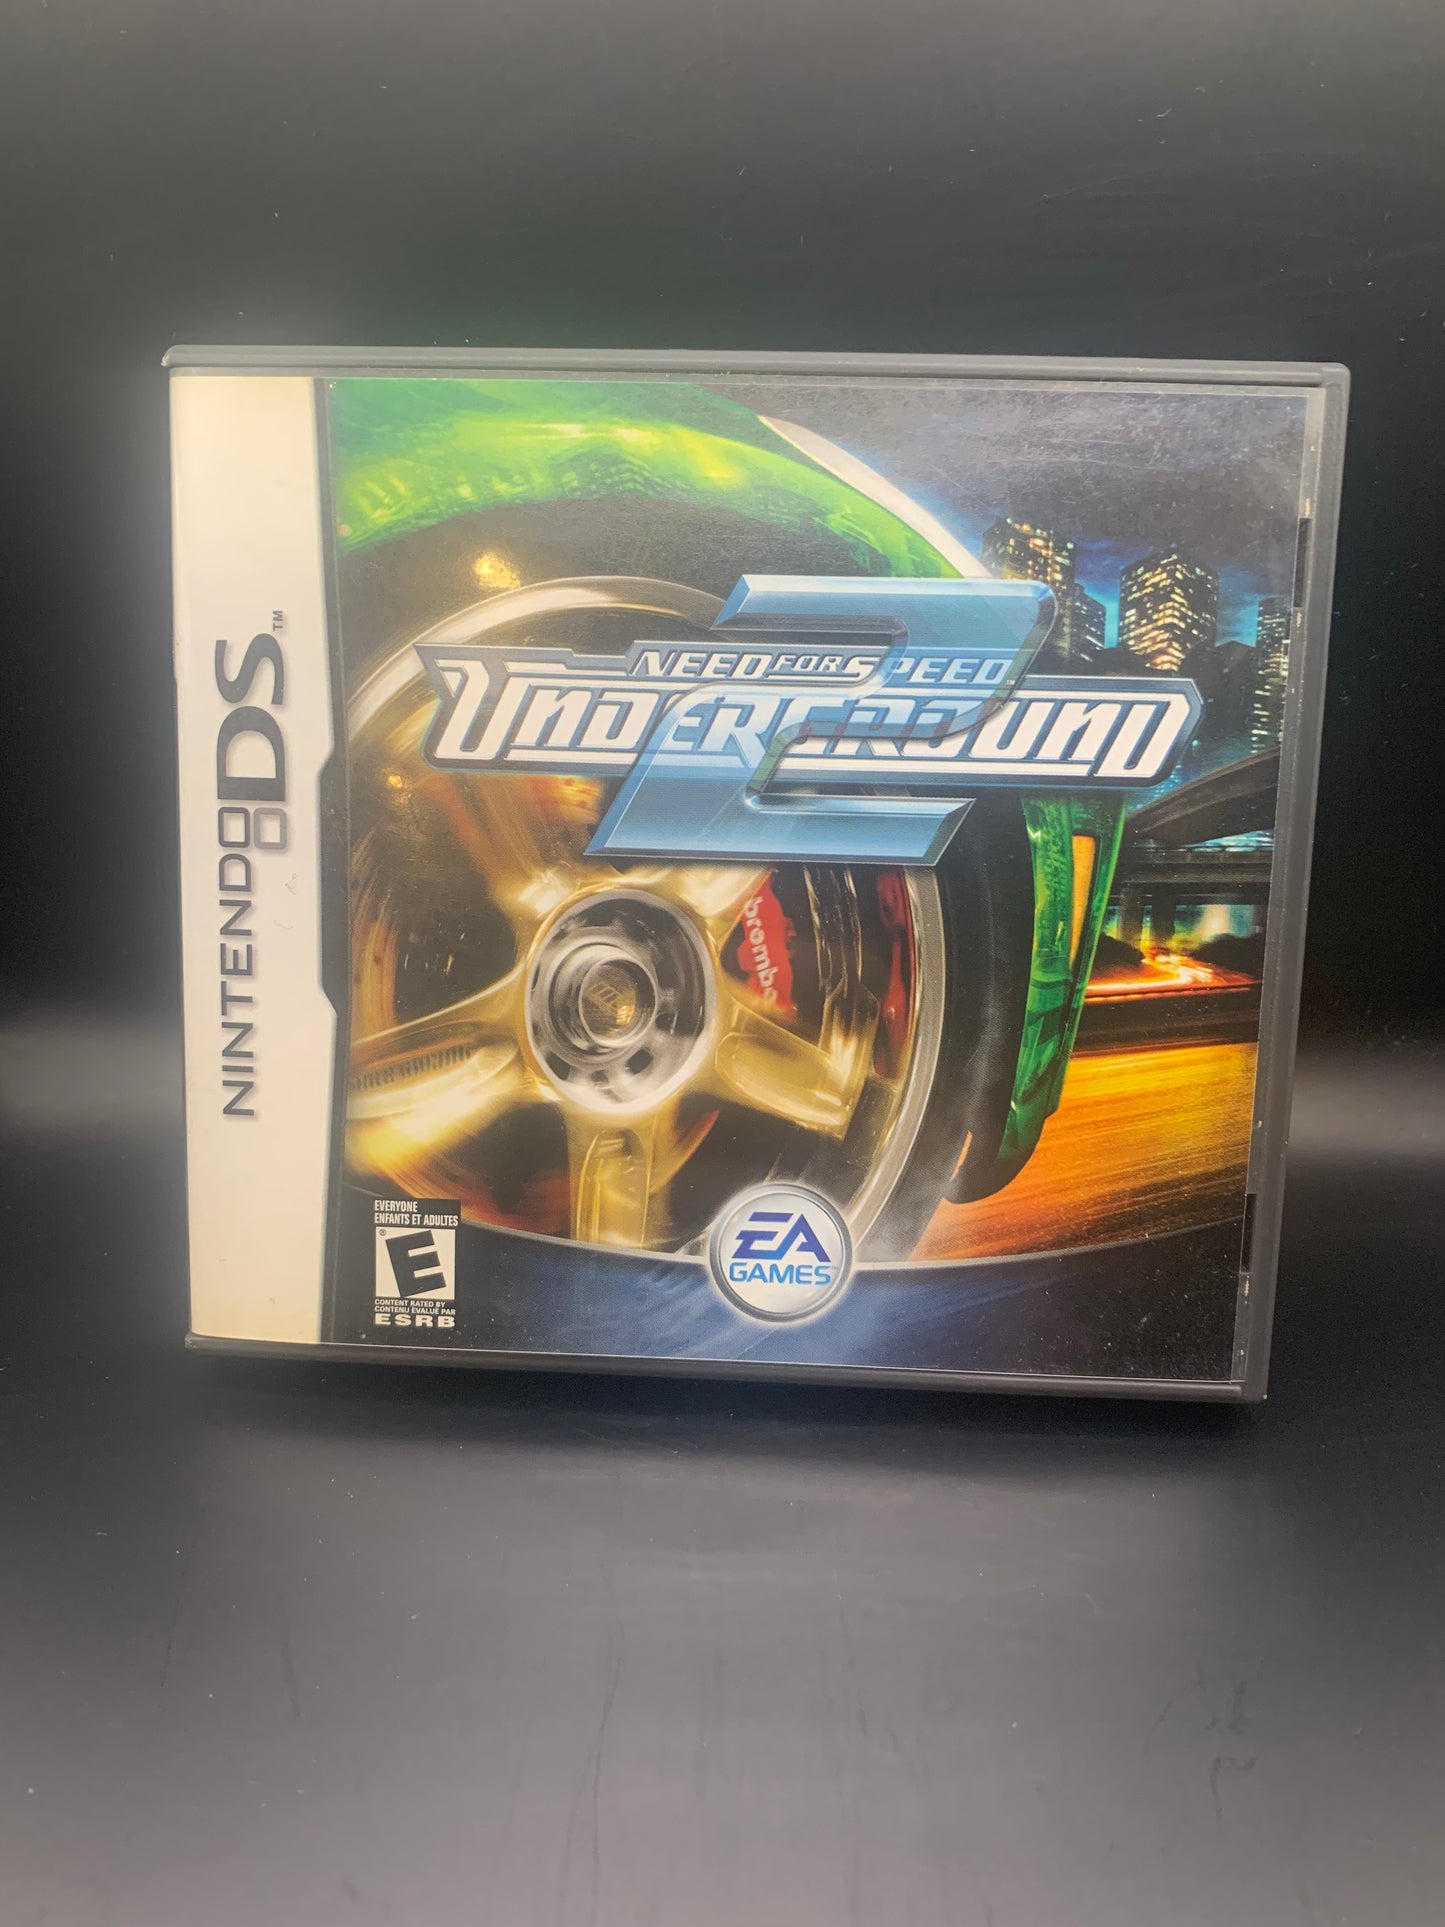 Nintendo DS Need for Speed Underground 2